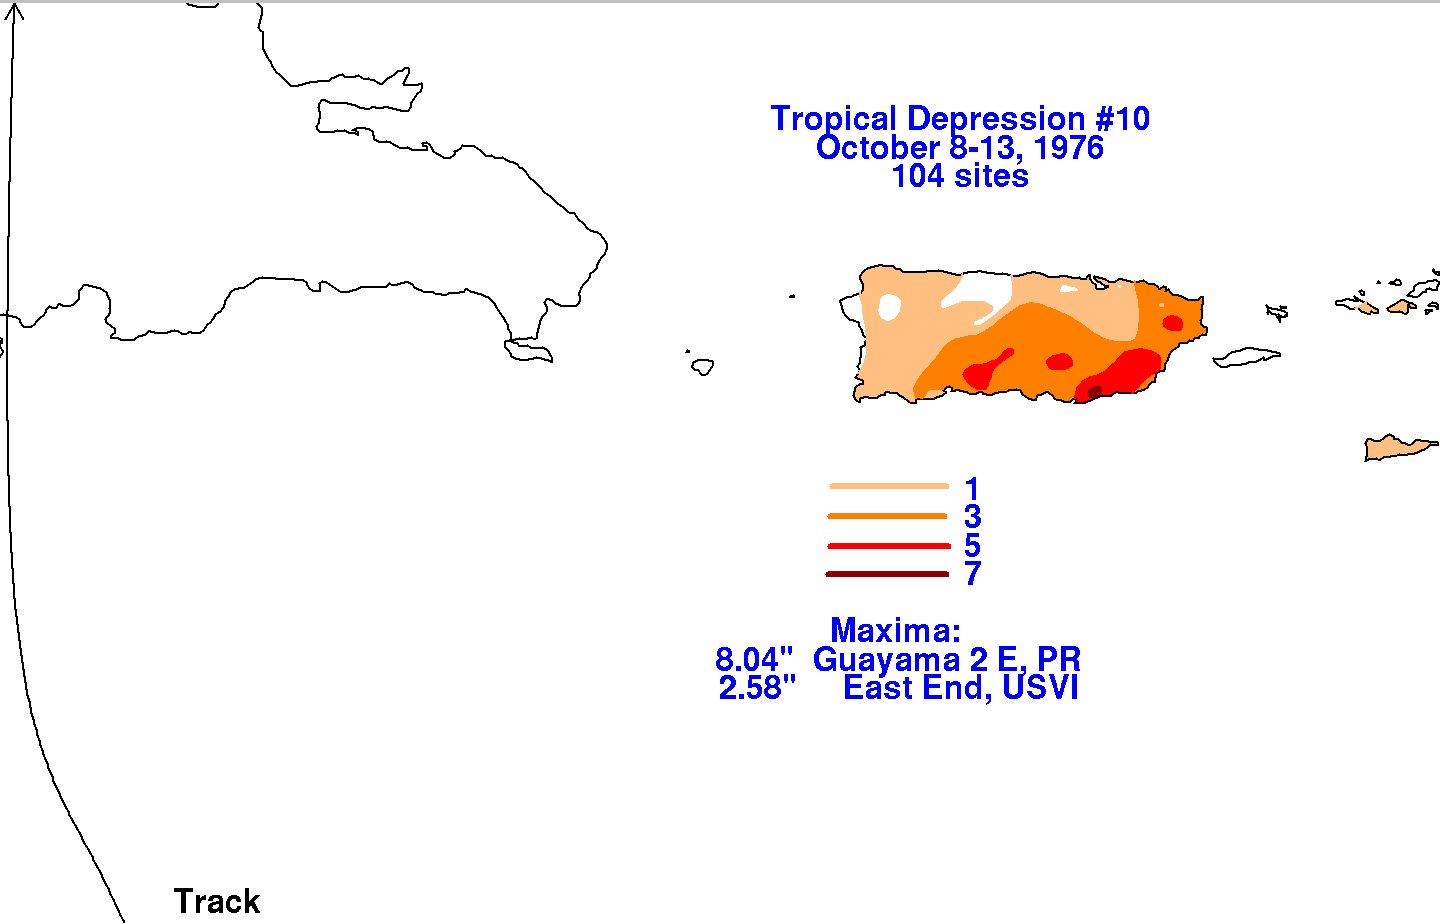 Northeast Caribbean Rainfall Totals for Tropical Depression 10 (1976)